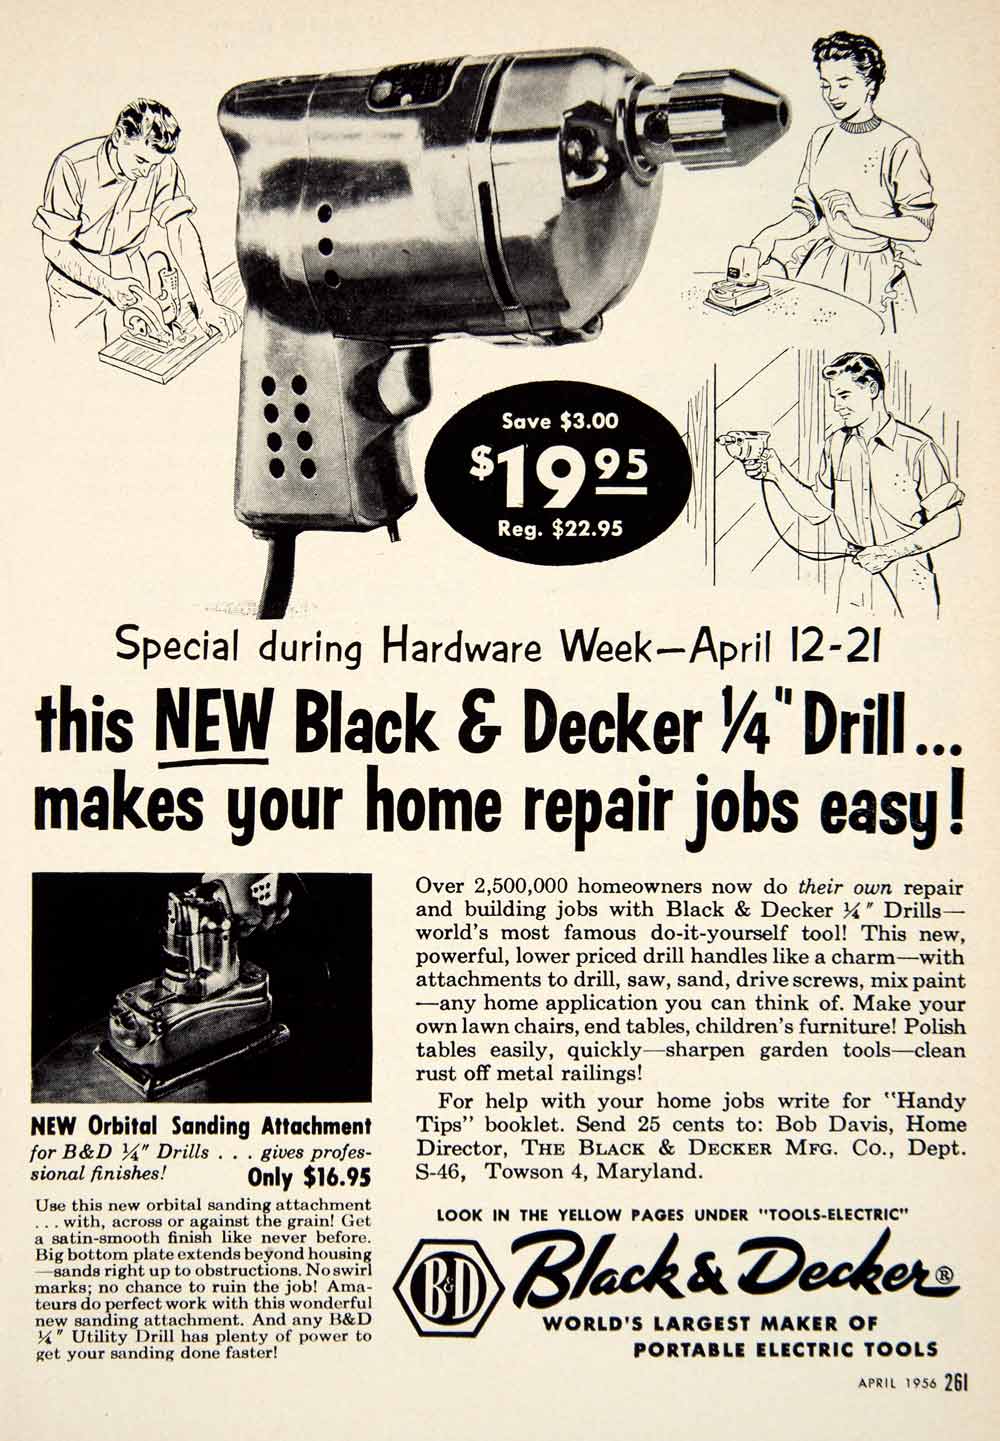 1957 Black & Decker Tools Ad Matted Vintage 11x14 Print 